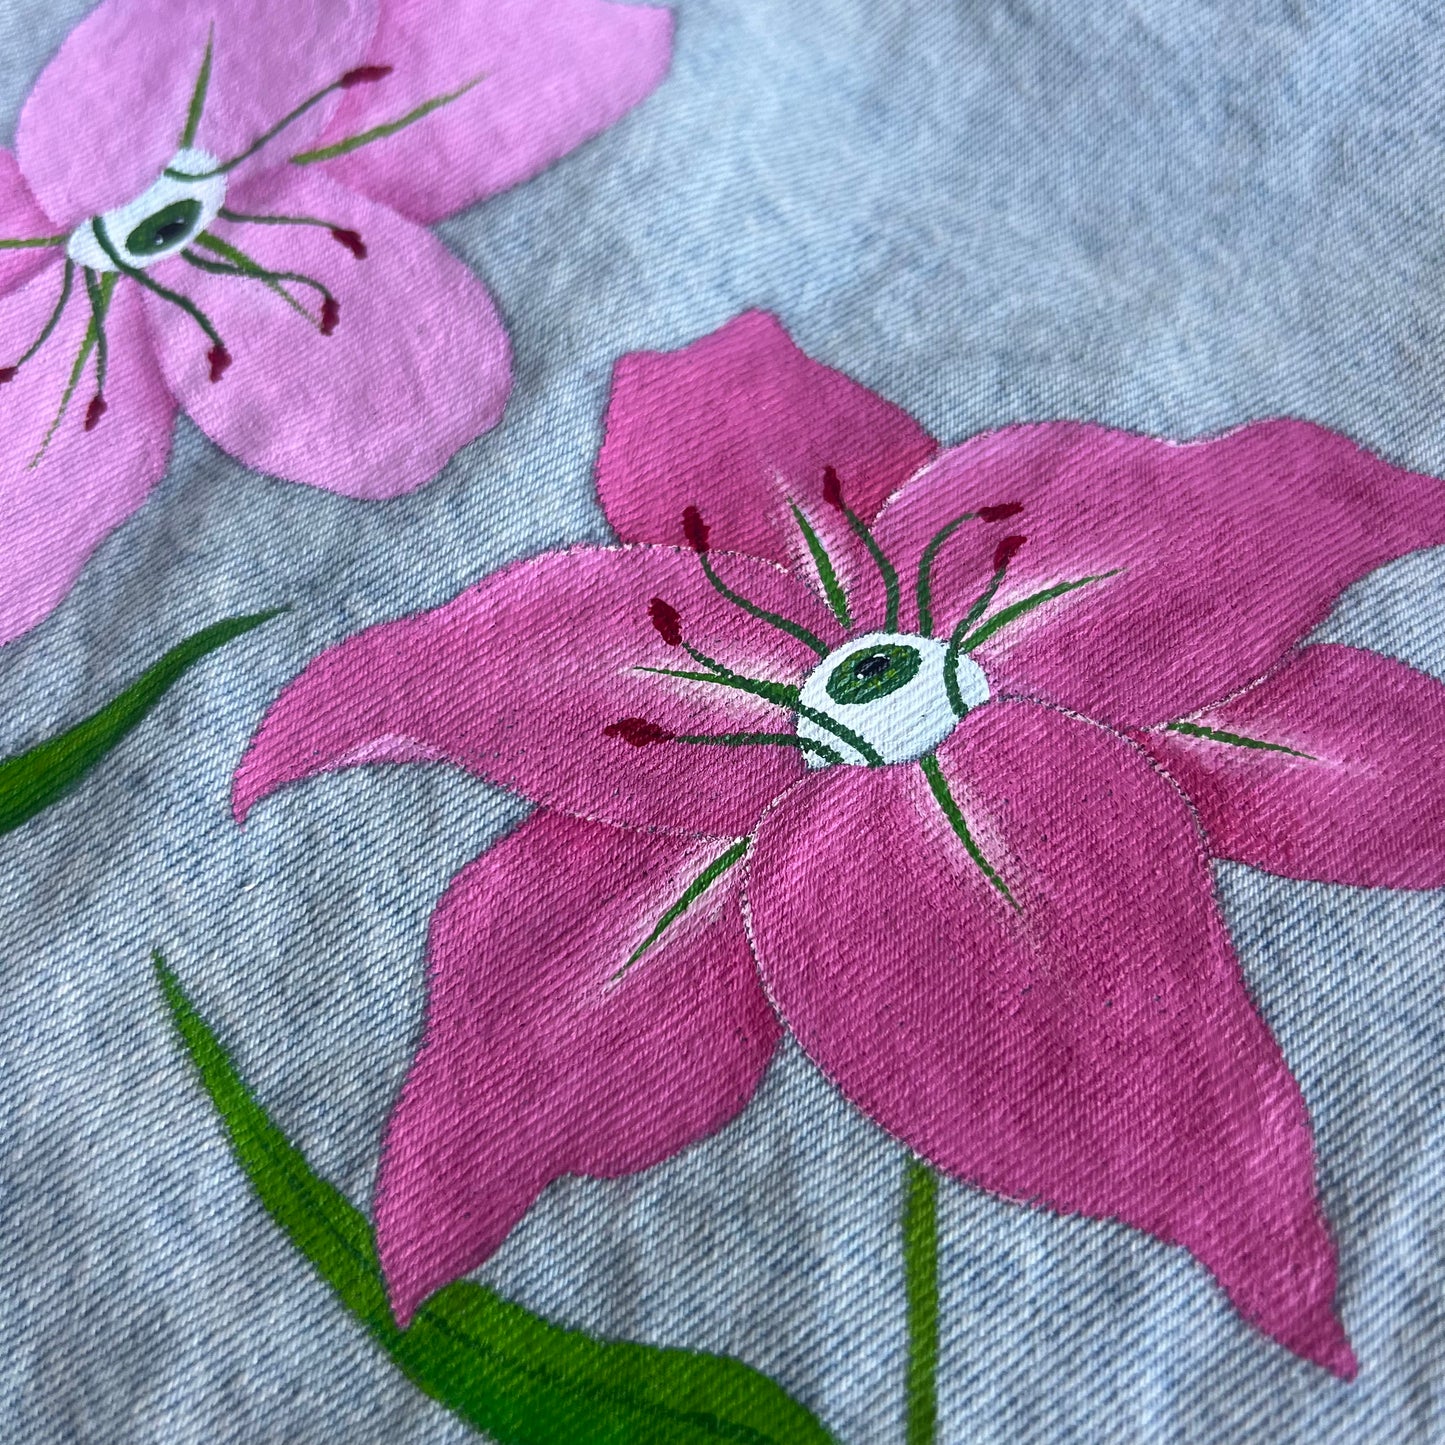 hand-painted denim jacket - smitten lilies